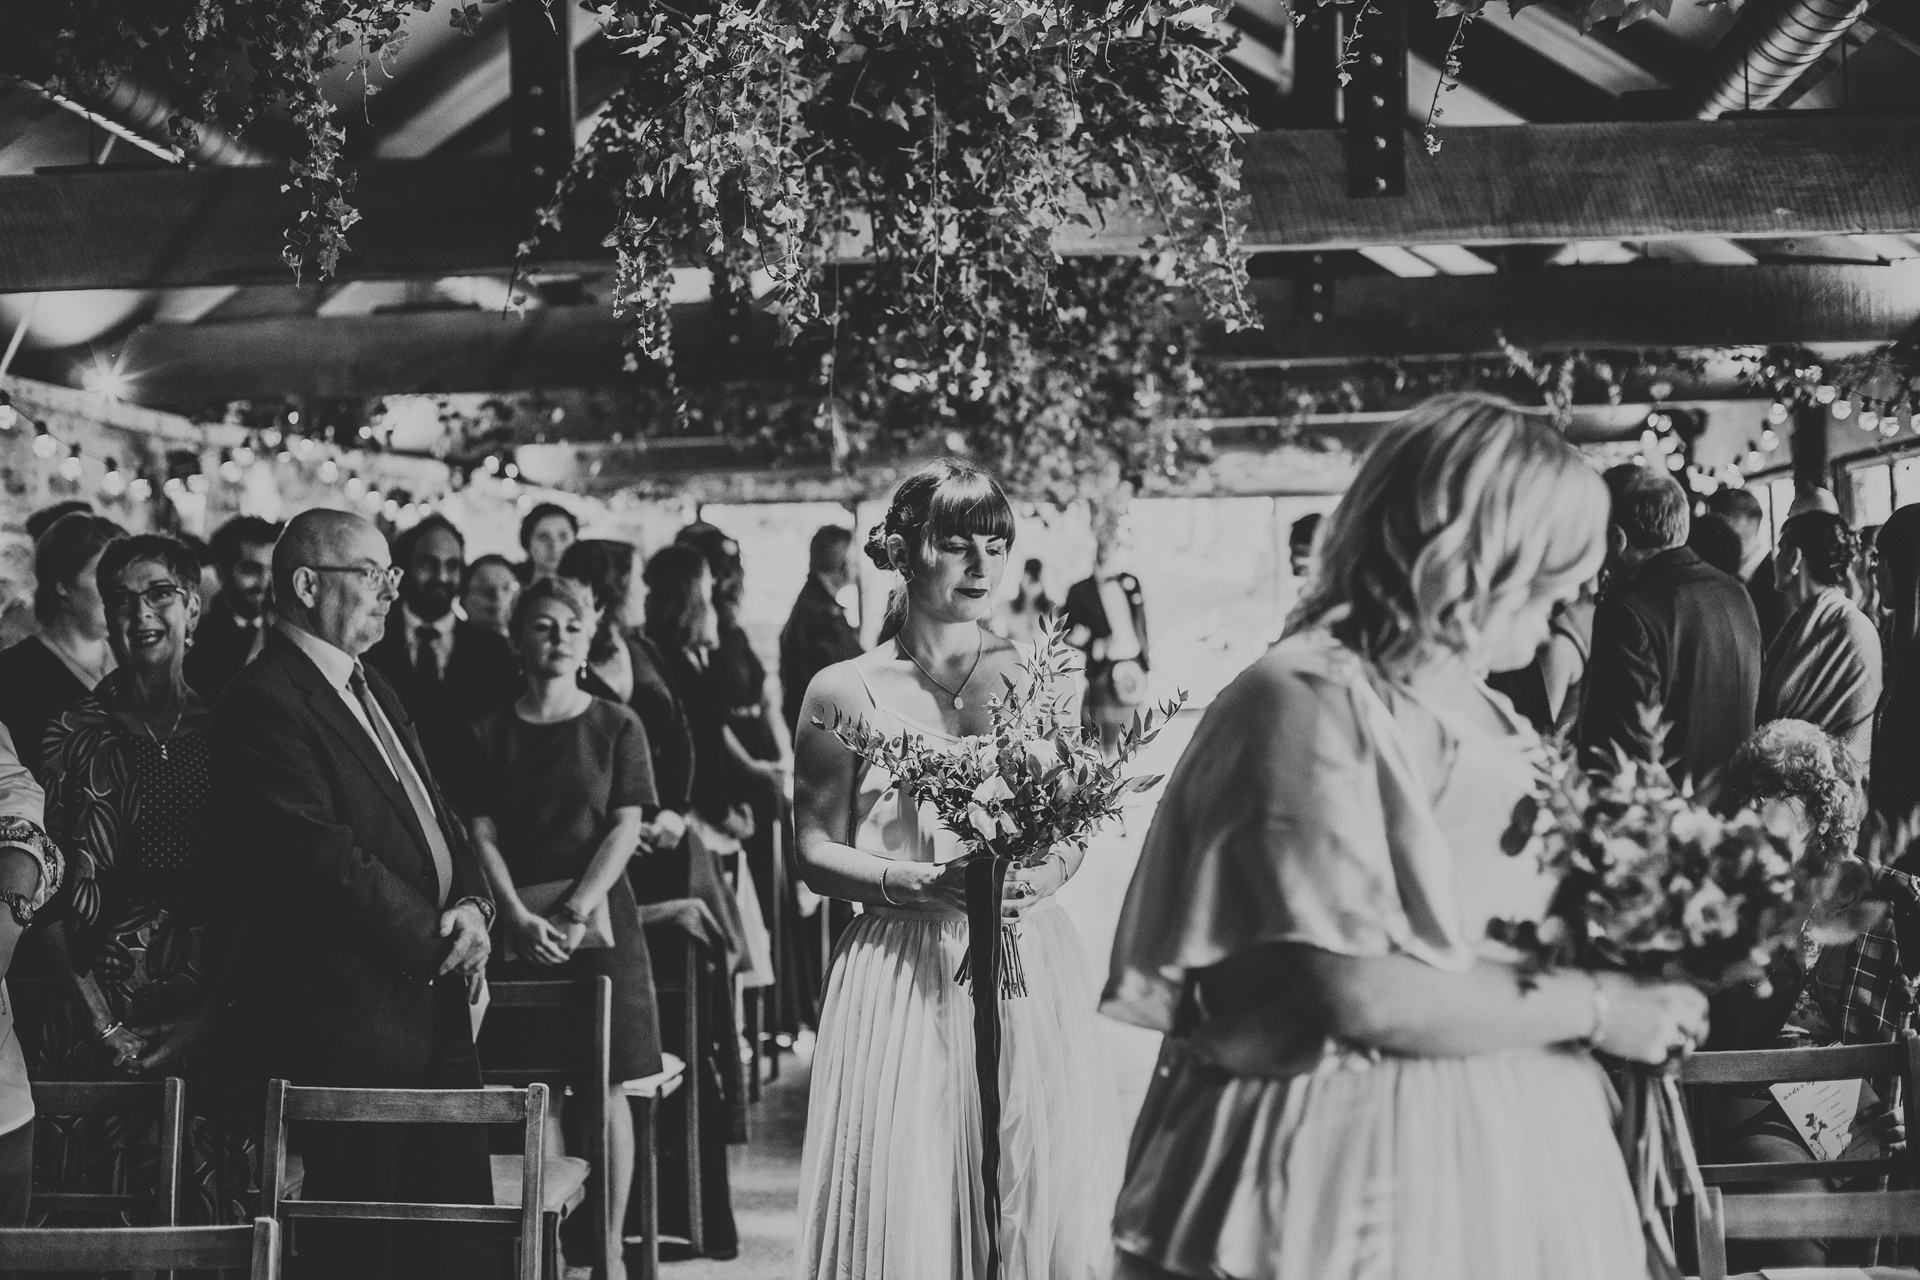 Third bridesmaid walks down the aisle. Photograph in black and white. 